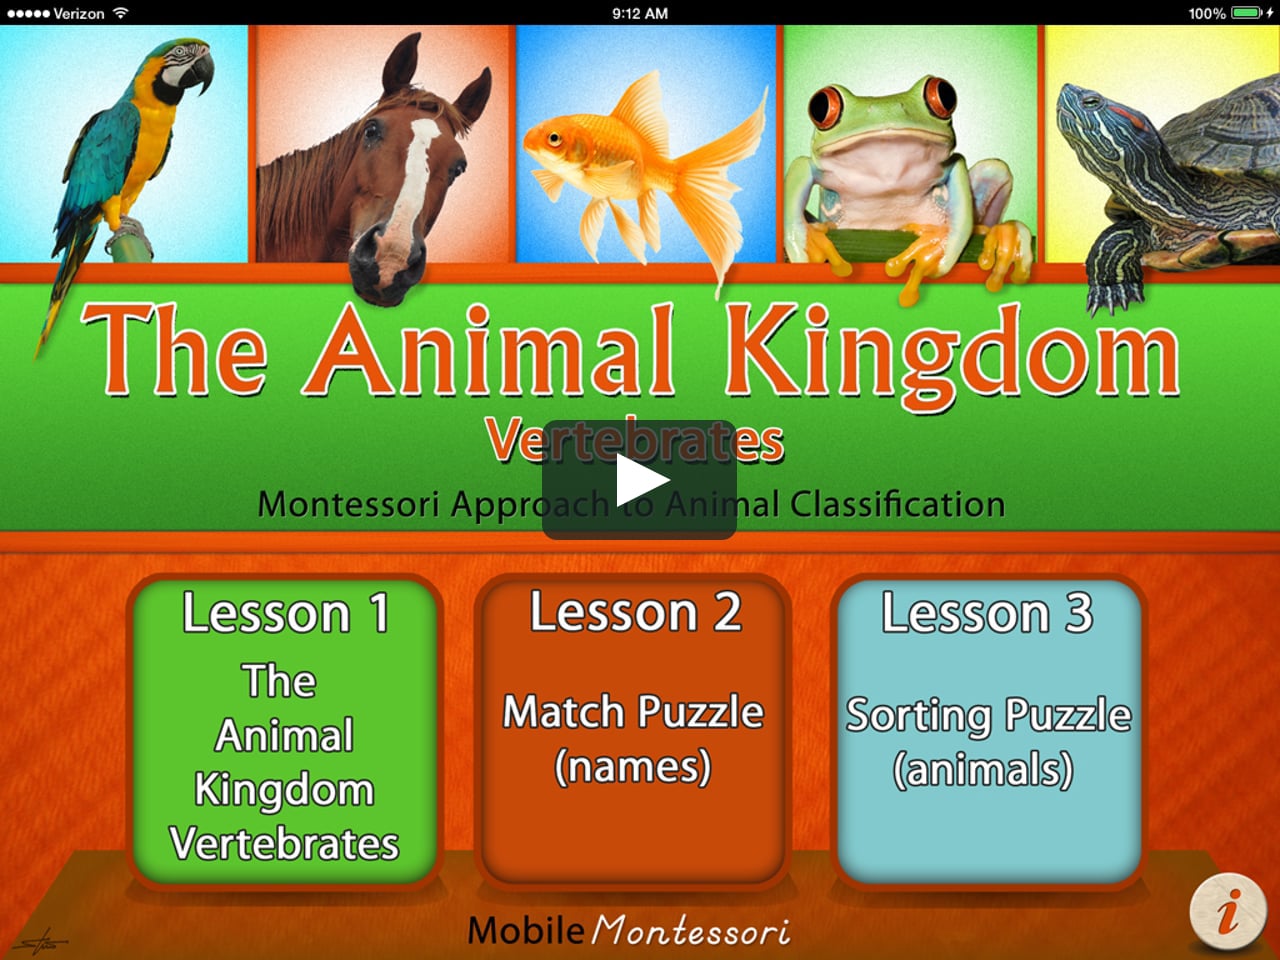 The Animal Kingdon Vertebrates on Vimeo